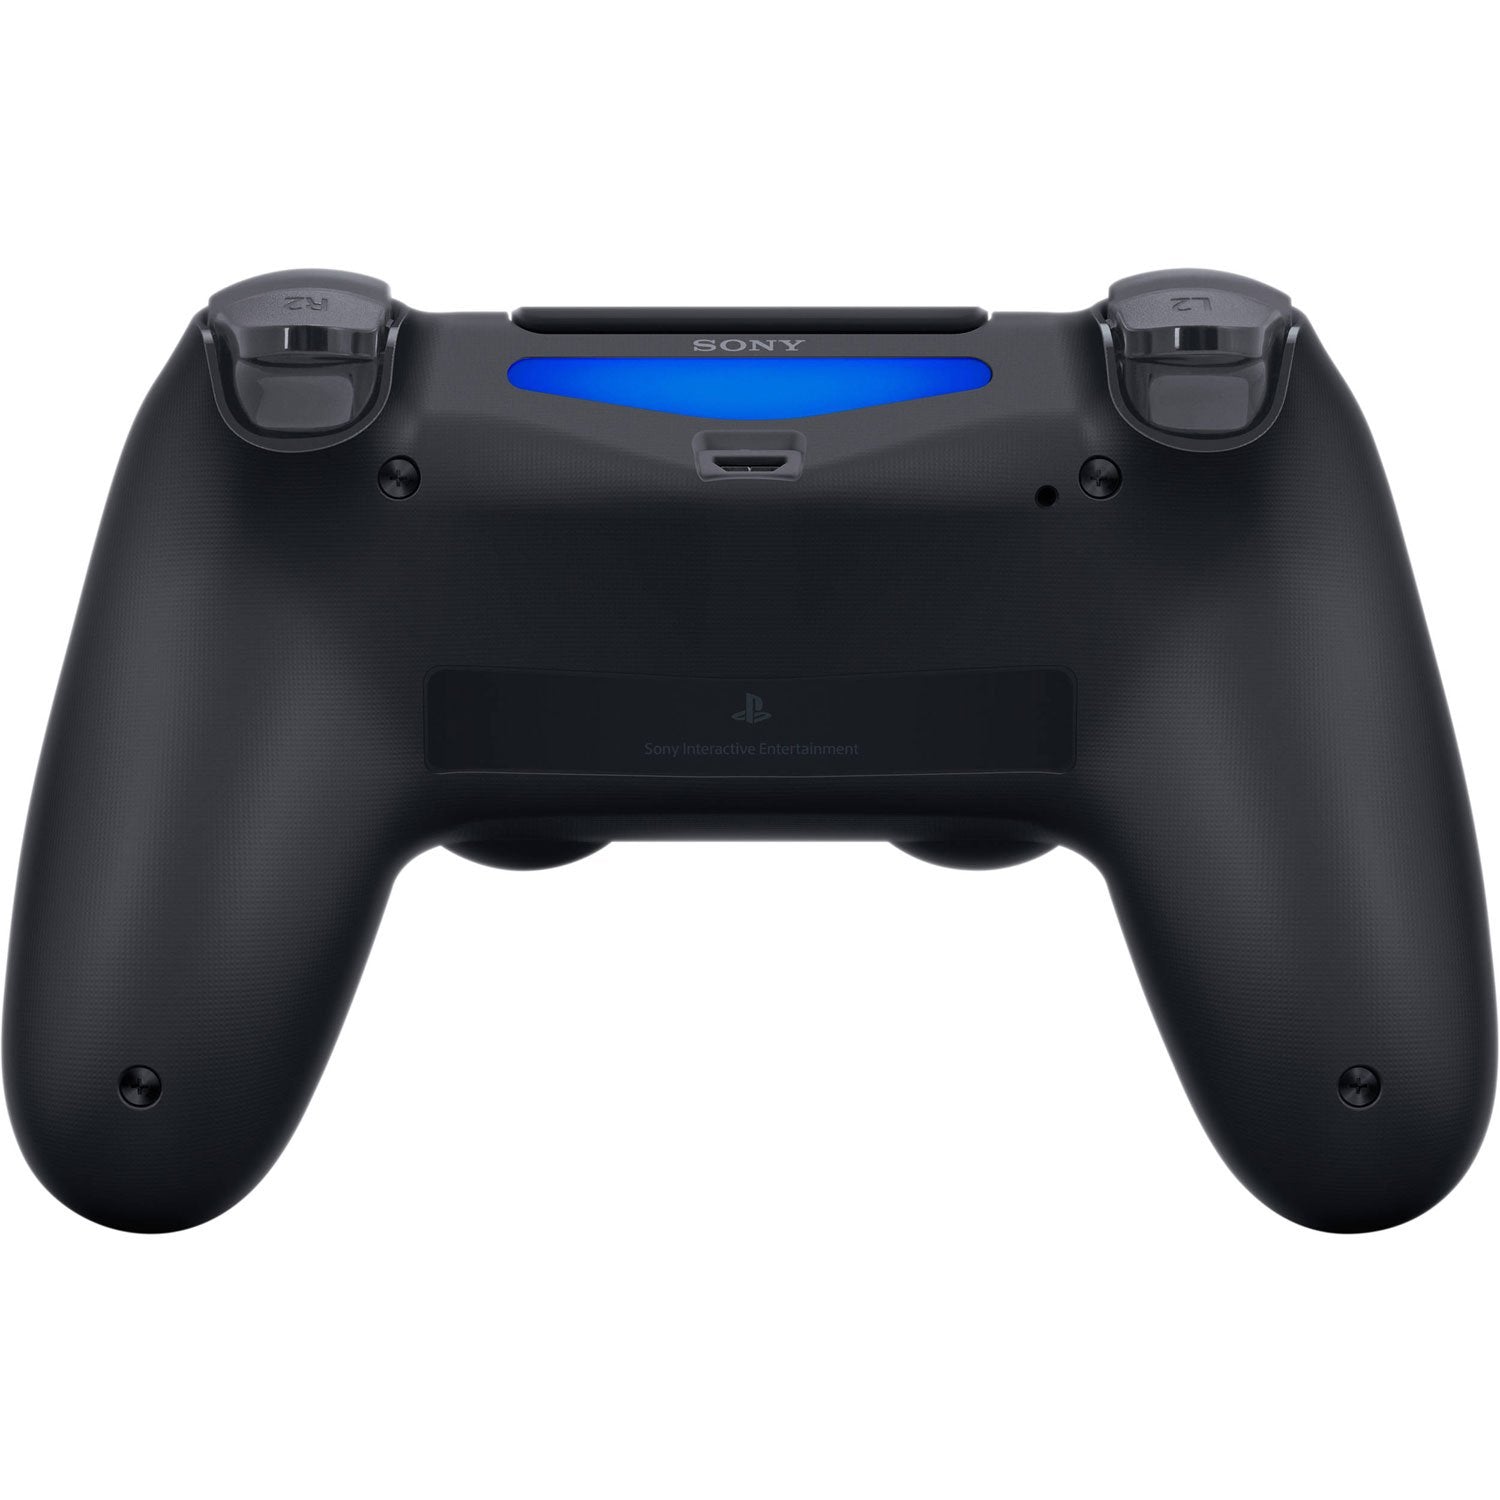 Sony PlayStation 4 DualShock 4 Wireless Controller - Black - New Version  freeshipping - Pro-Distributing